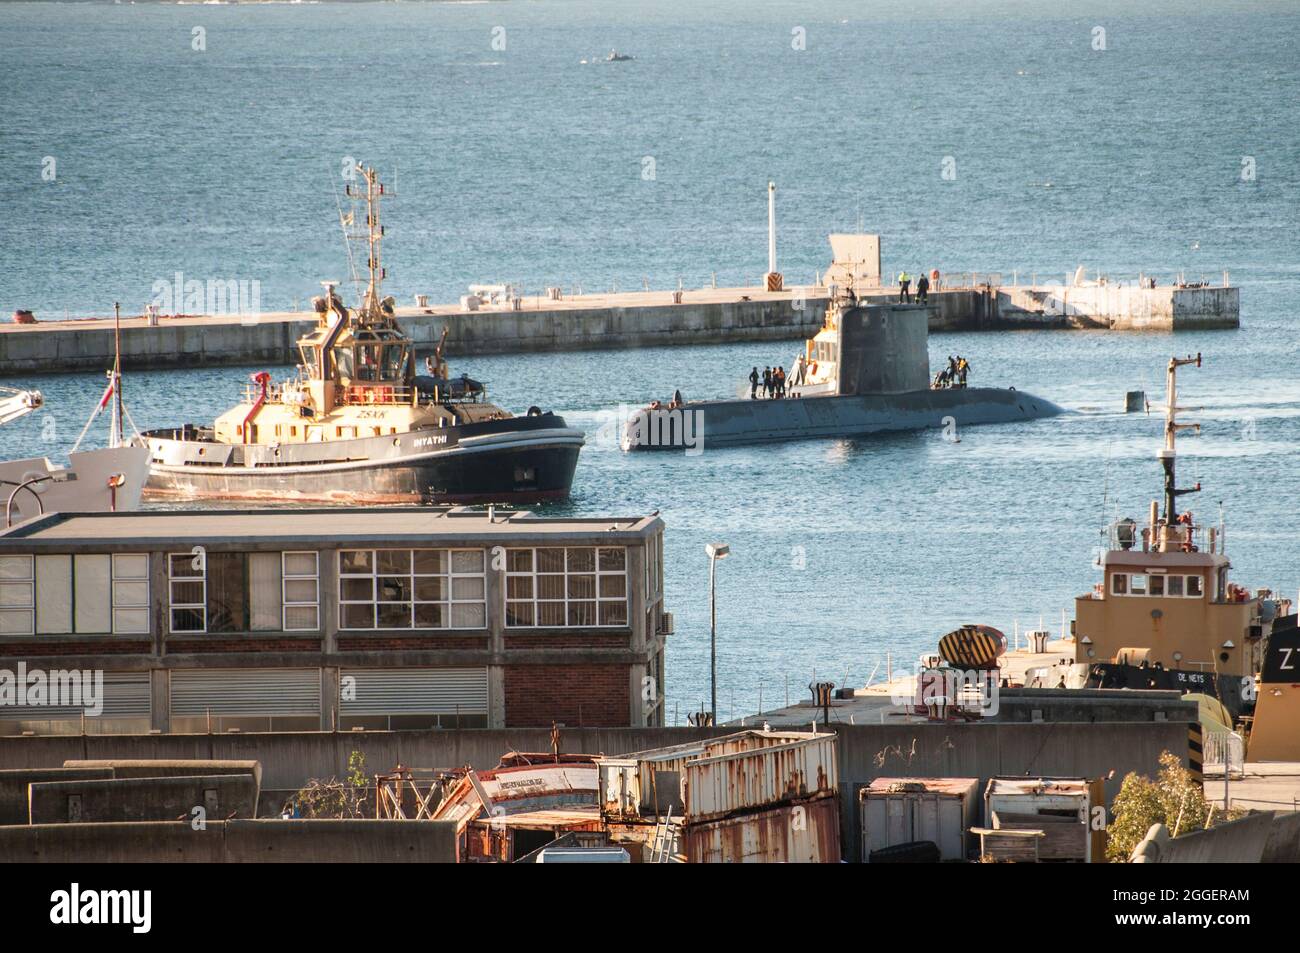 SA Navy Submarine docking with tugboats Stock Photo